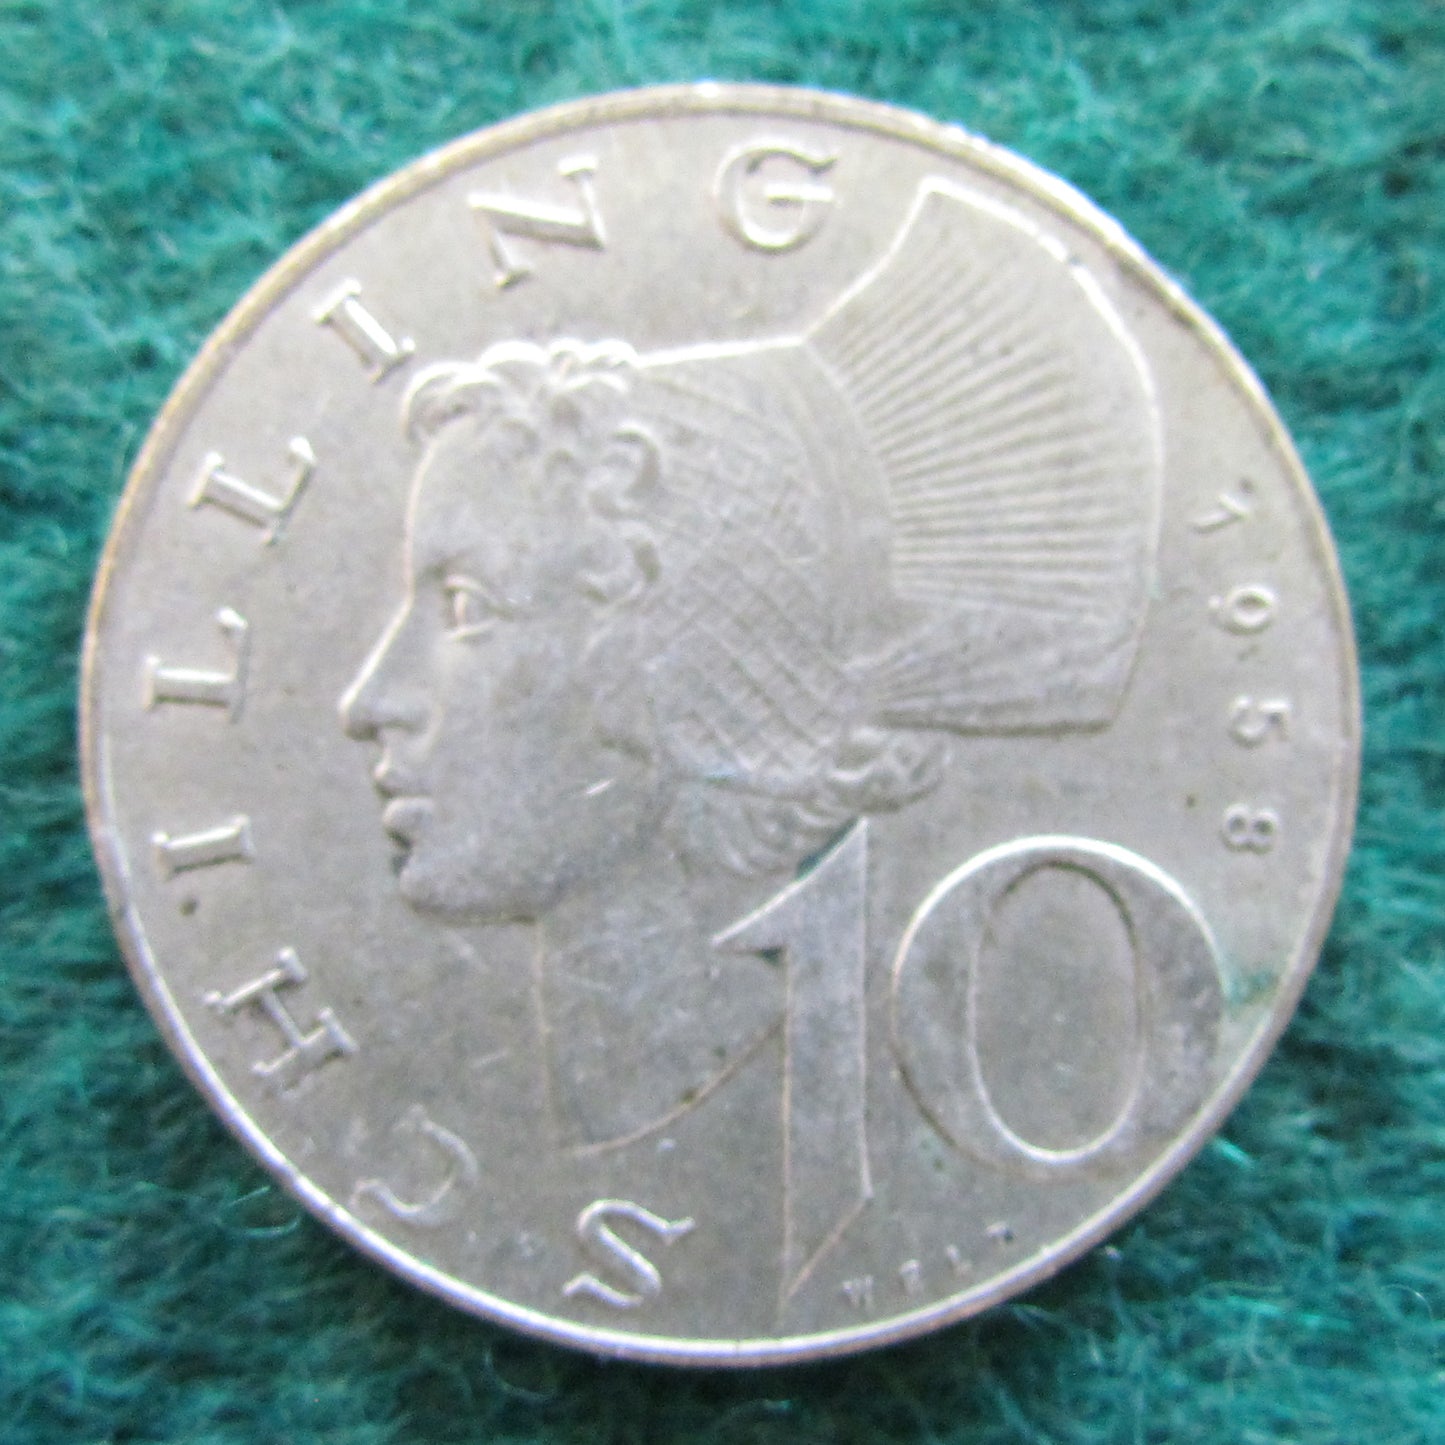 Austria 1958 10 Schilling Coin